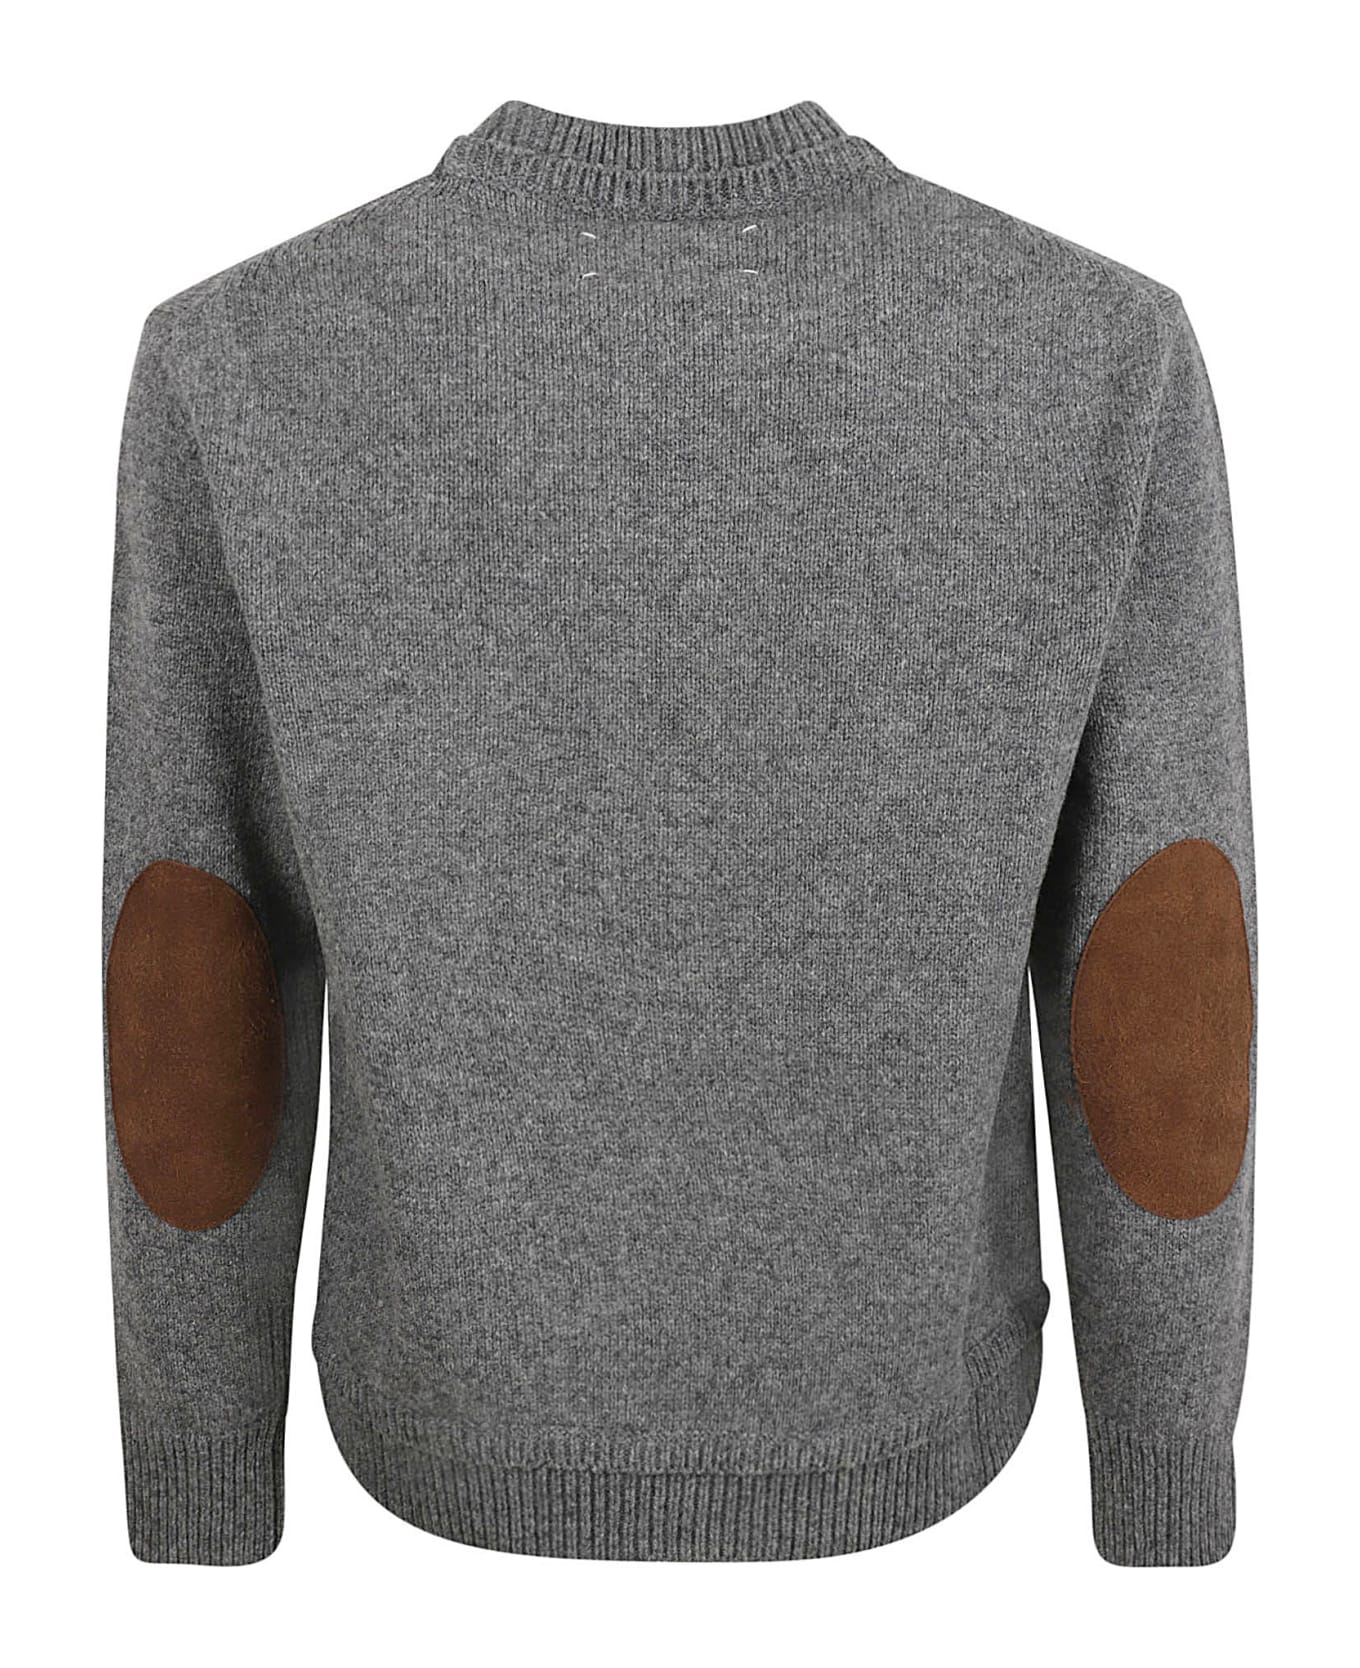 Maison Margiela Elbow Patch Sweater - MEDIUM GREY